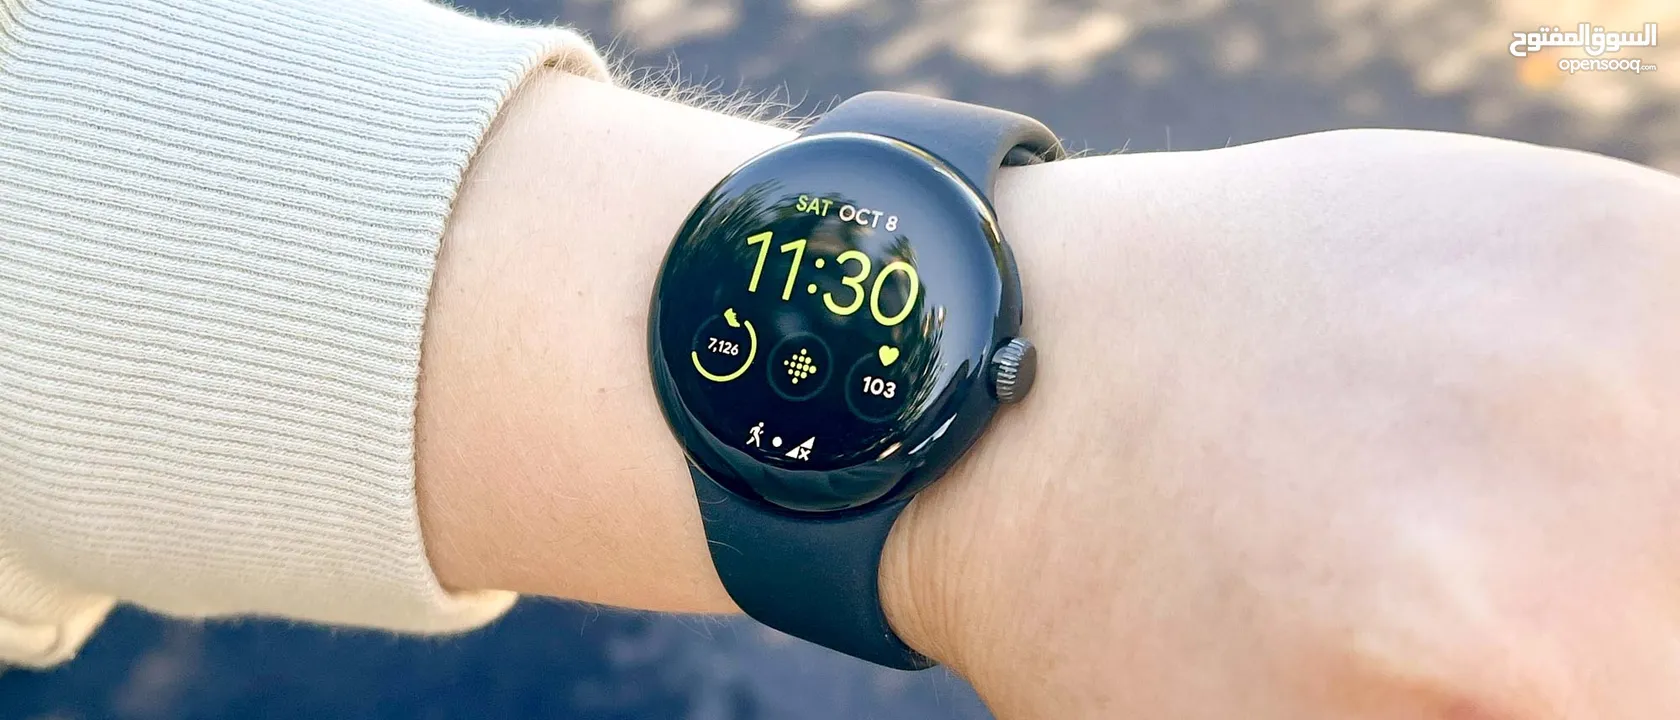 Google Pixel Watch ساعة قوقل بيكسل واتش